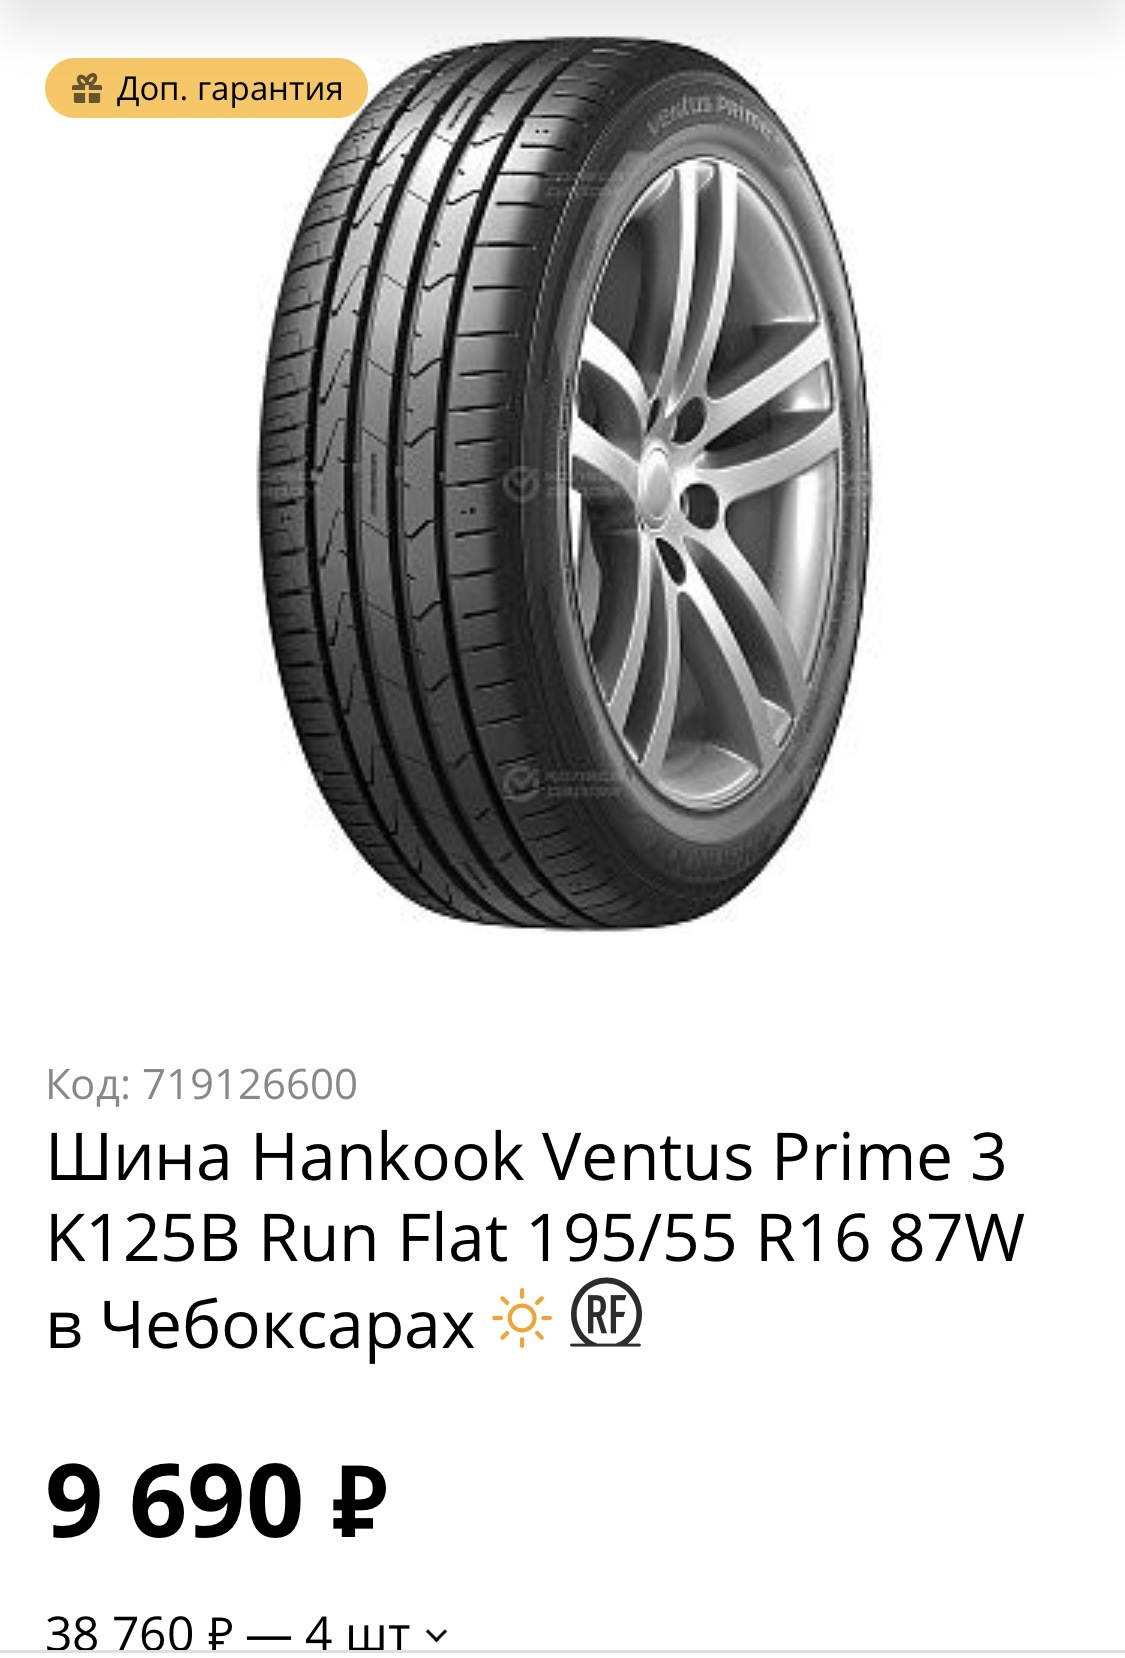 Ханкук Вентус Прайм 3 195 55 r16. Hankook Ventus Prime 4 Treadwear. Hankook Ventus Prime 4 k135. 195 55 R16 Солярис 2020.